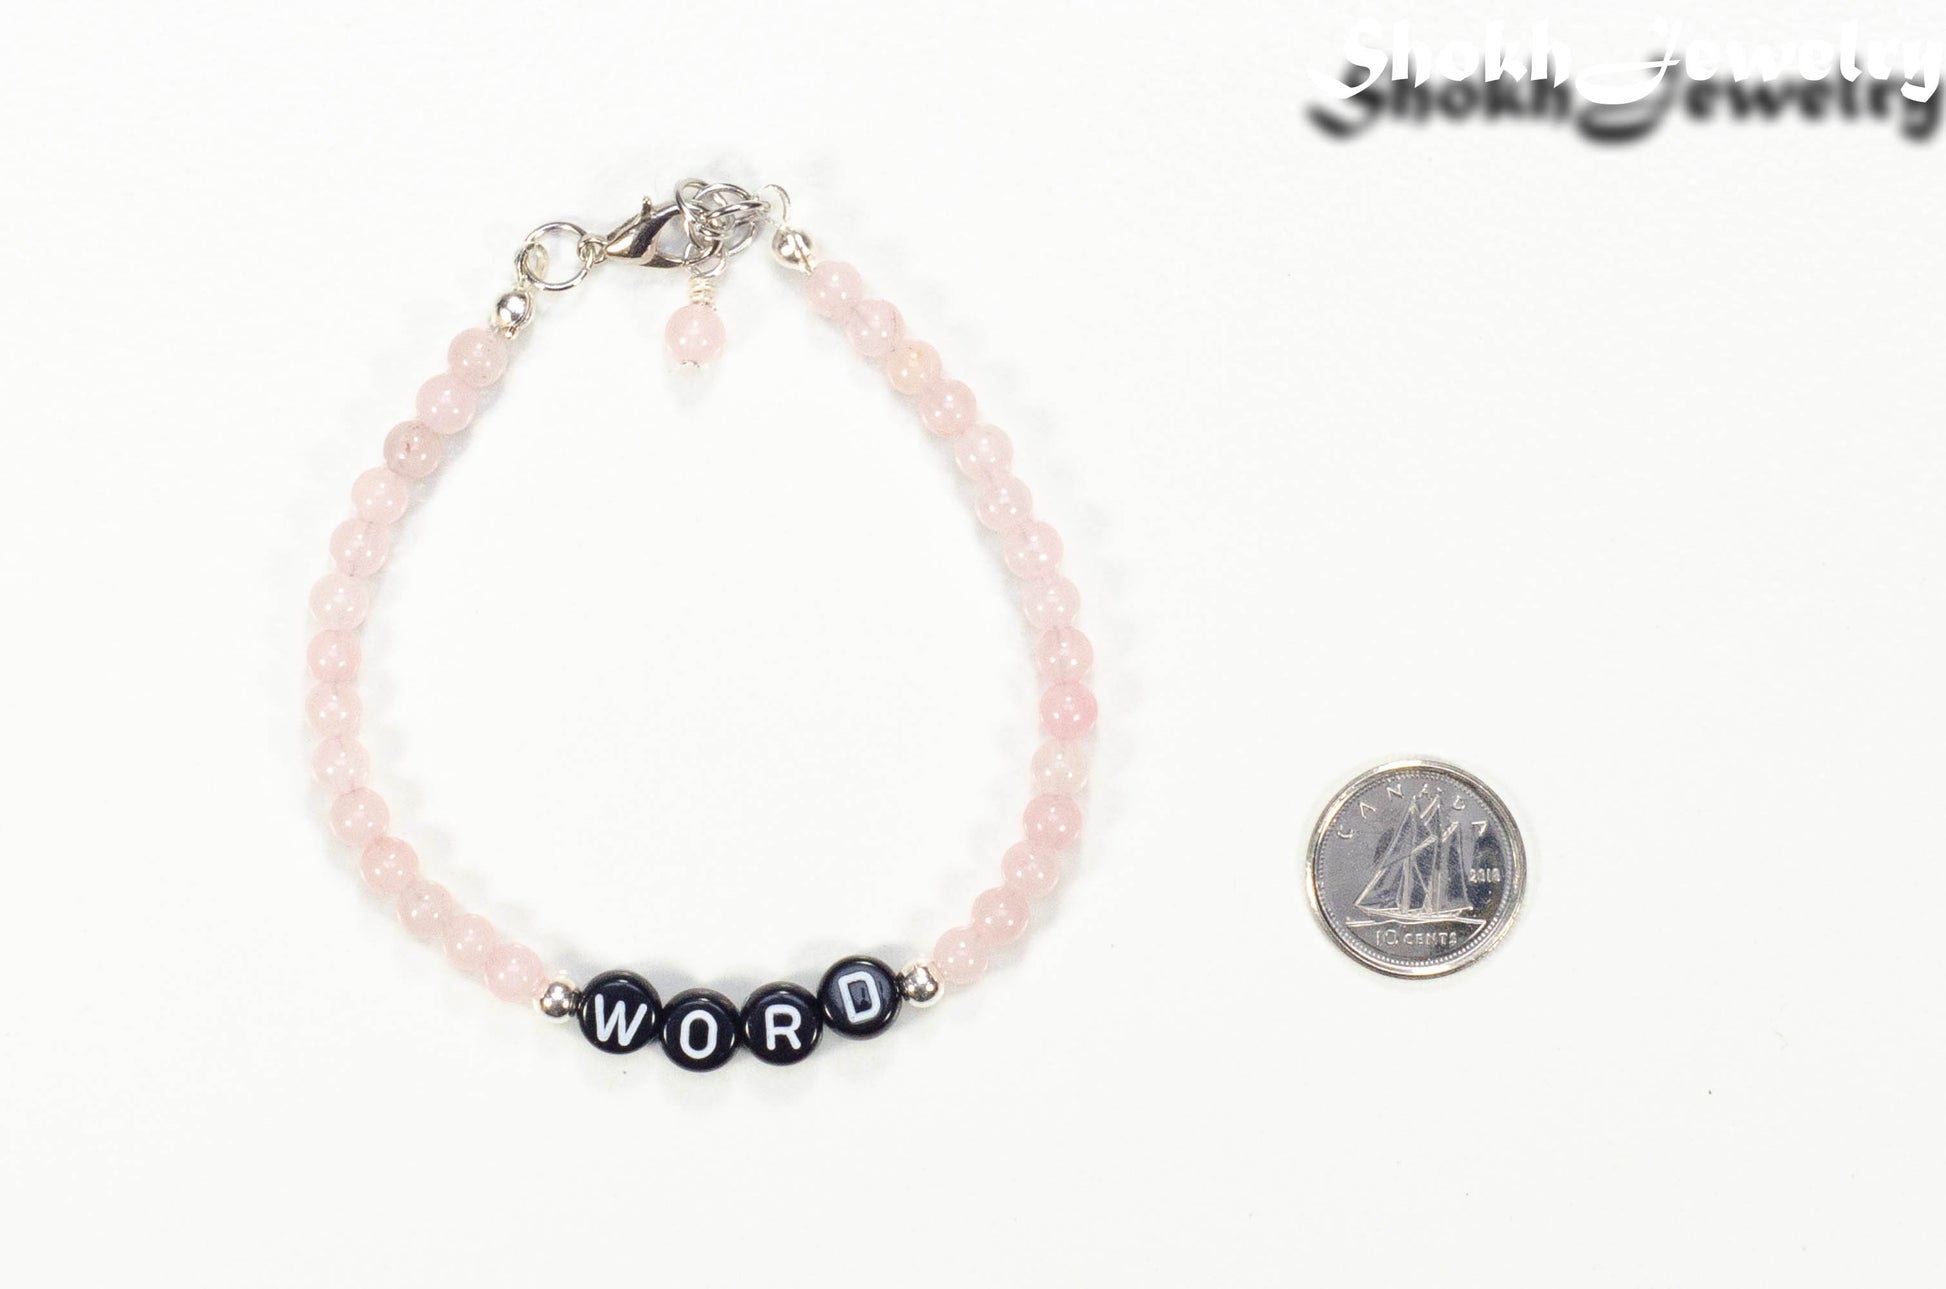 Personalized Rose Quartz Bracelet with Clasp beside a dime.